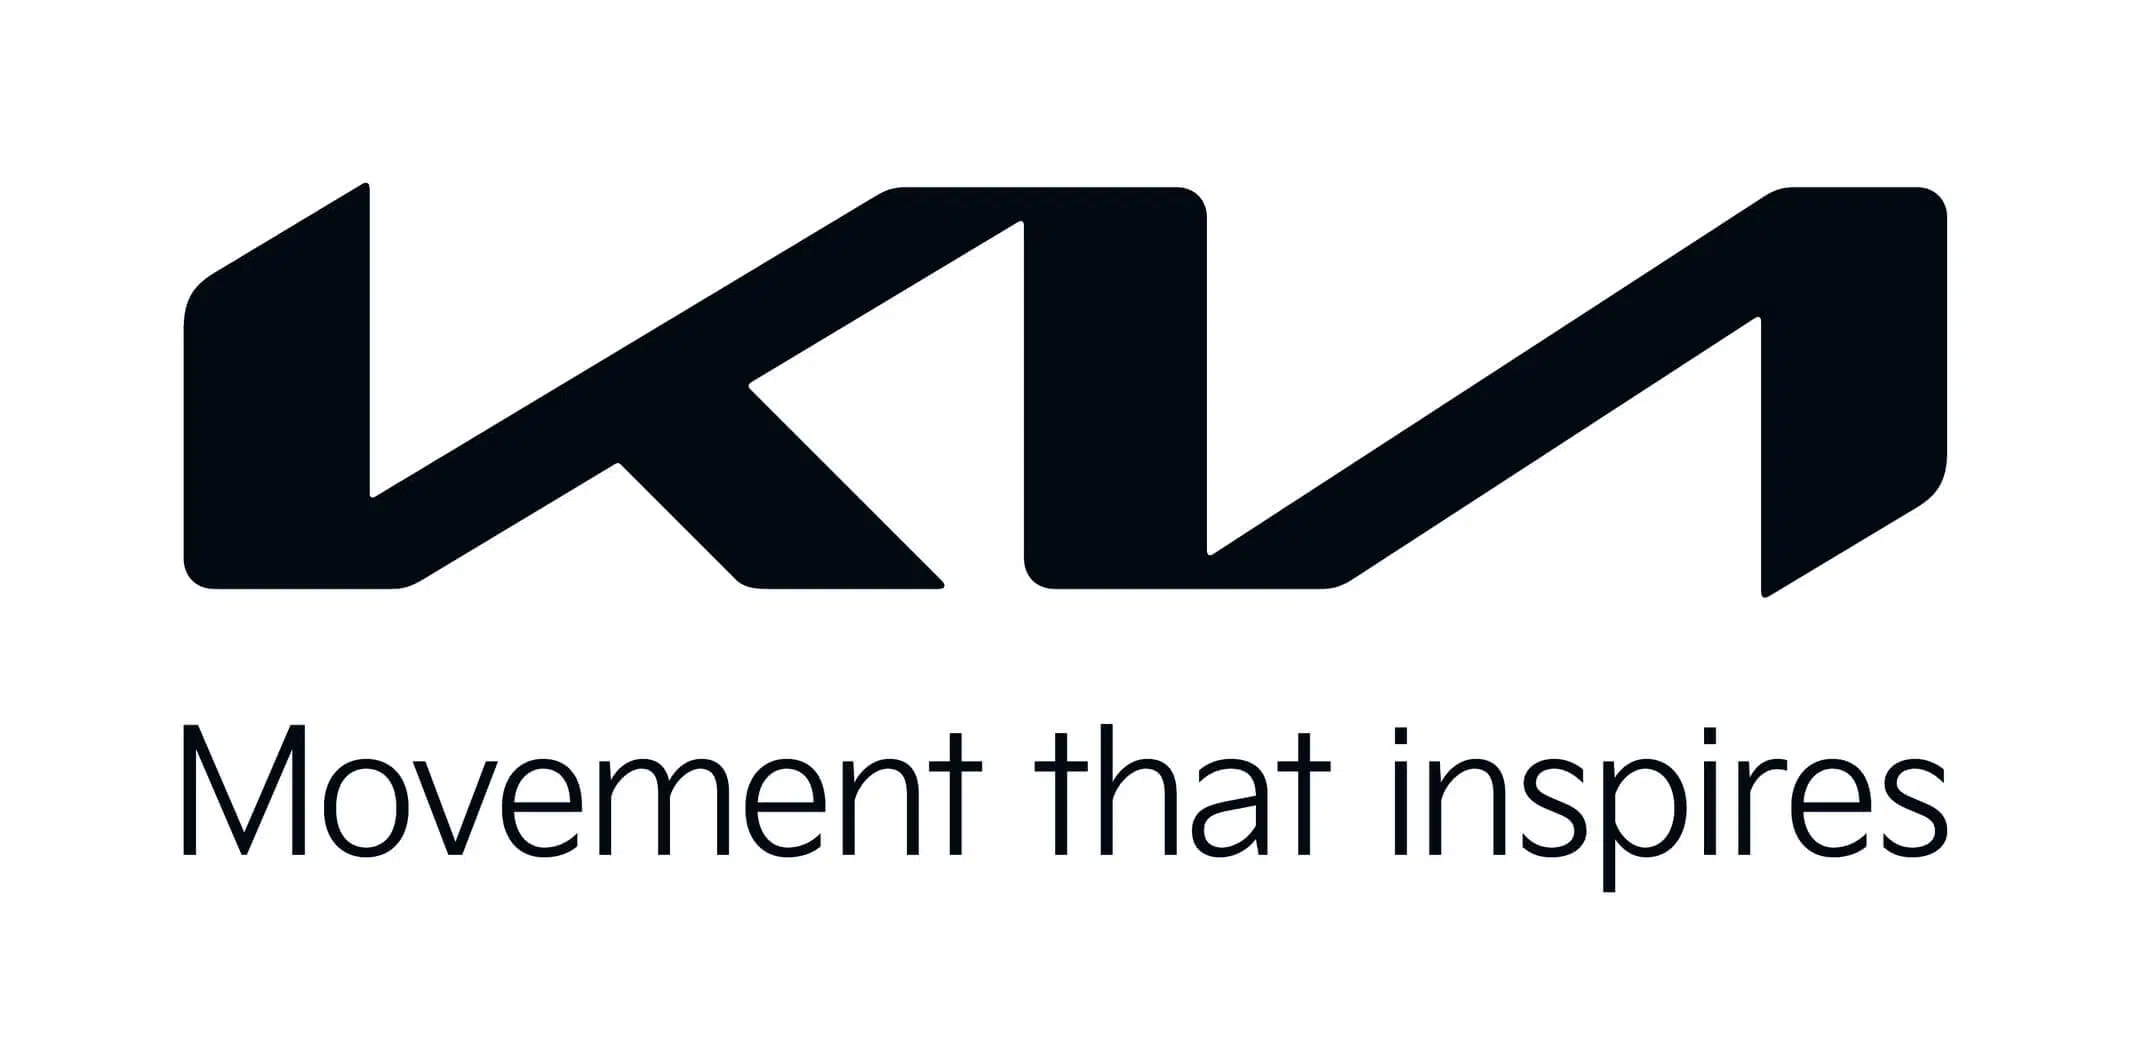 Kia logotipo